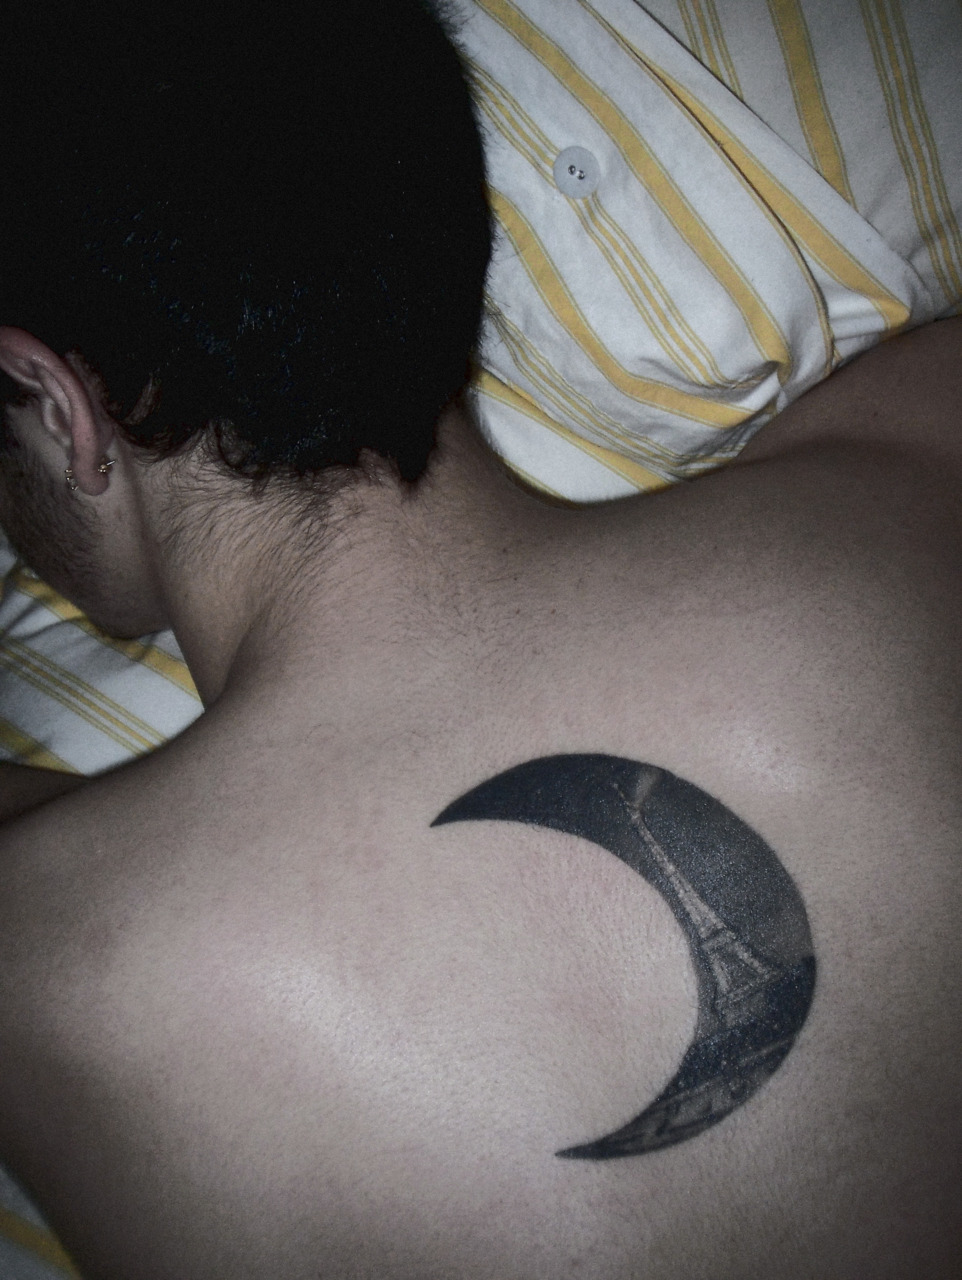 crescent-moon-tattoo-design-ideas